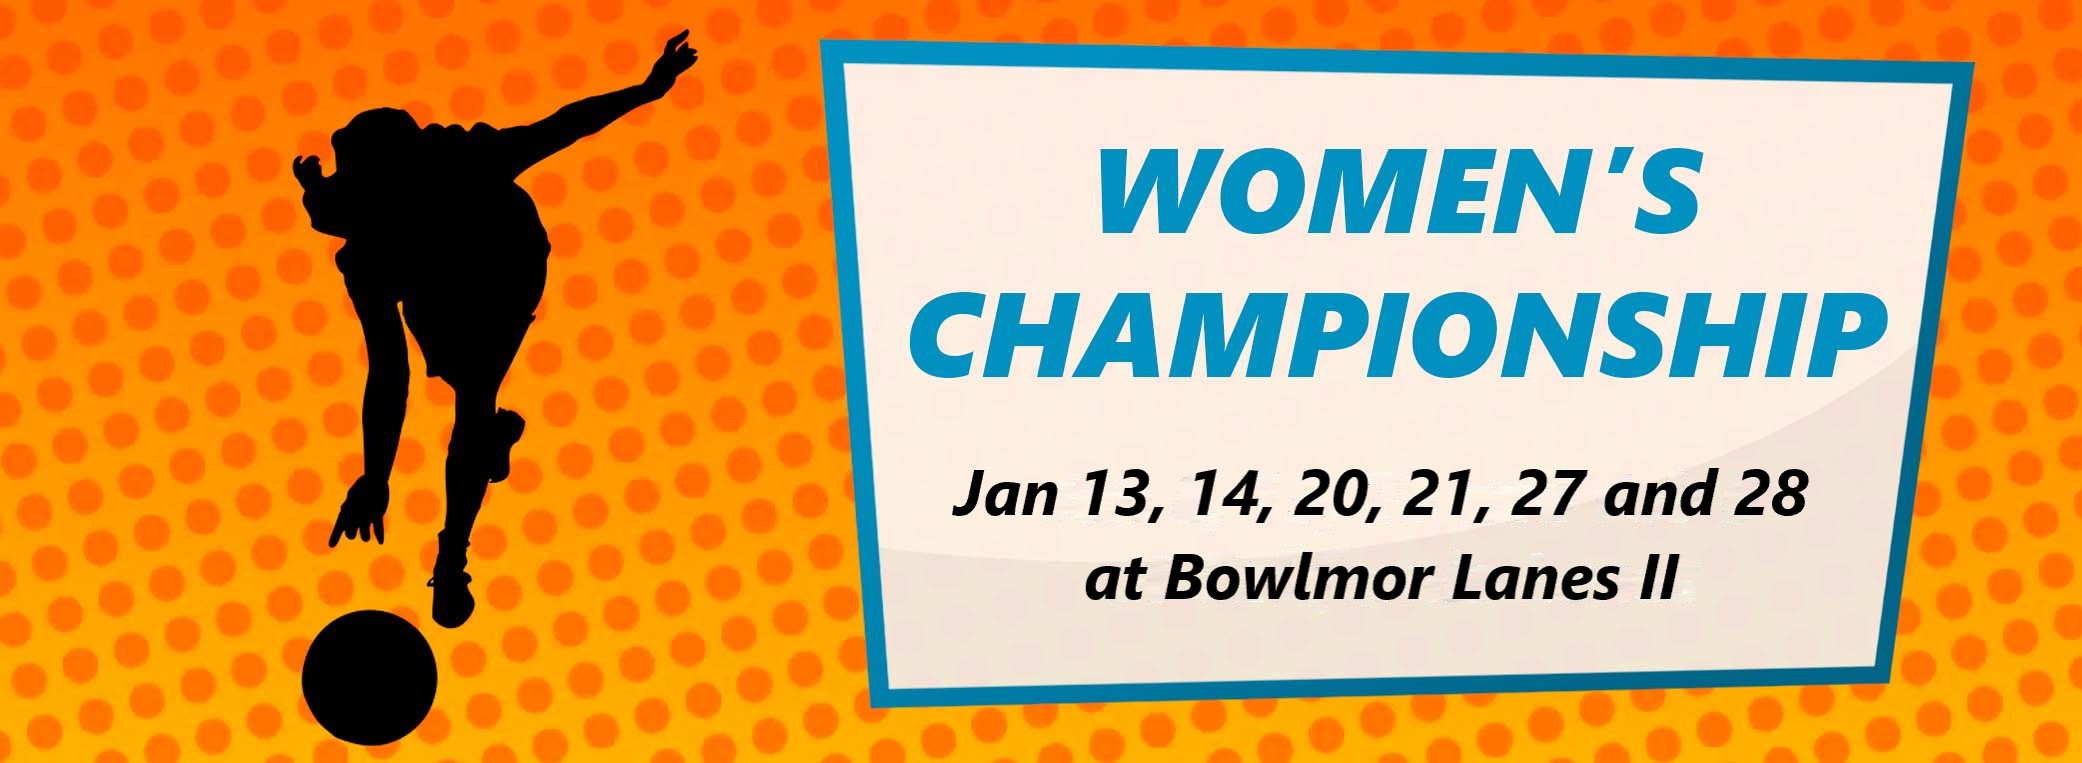 Women’s Championship